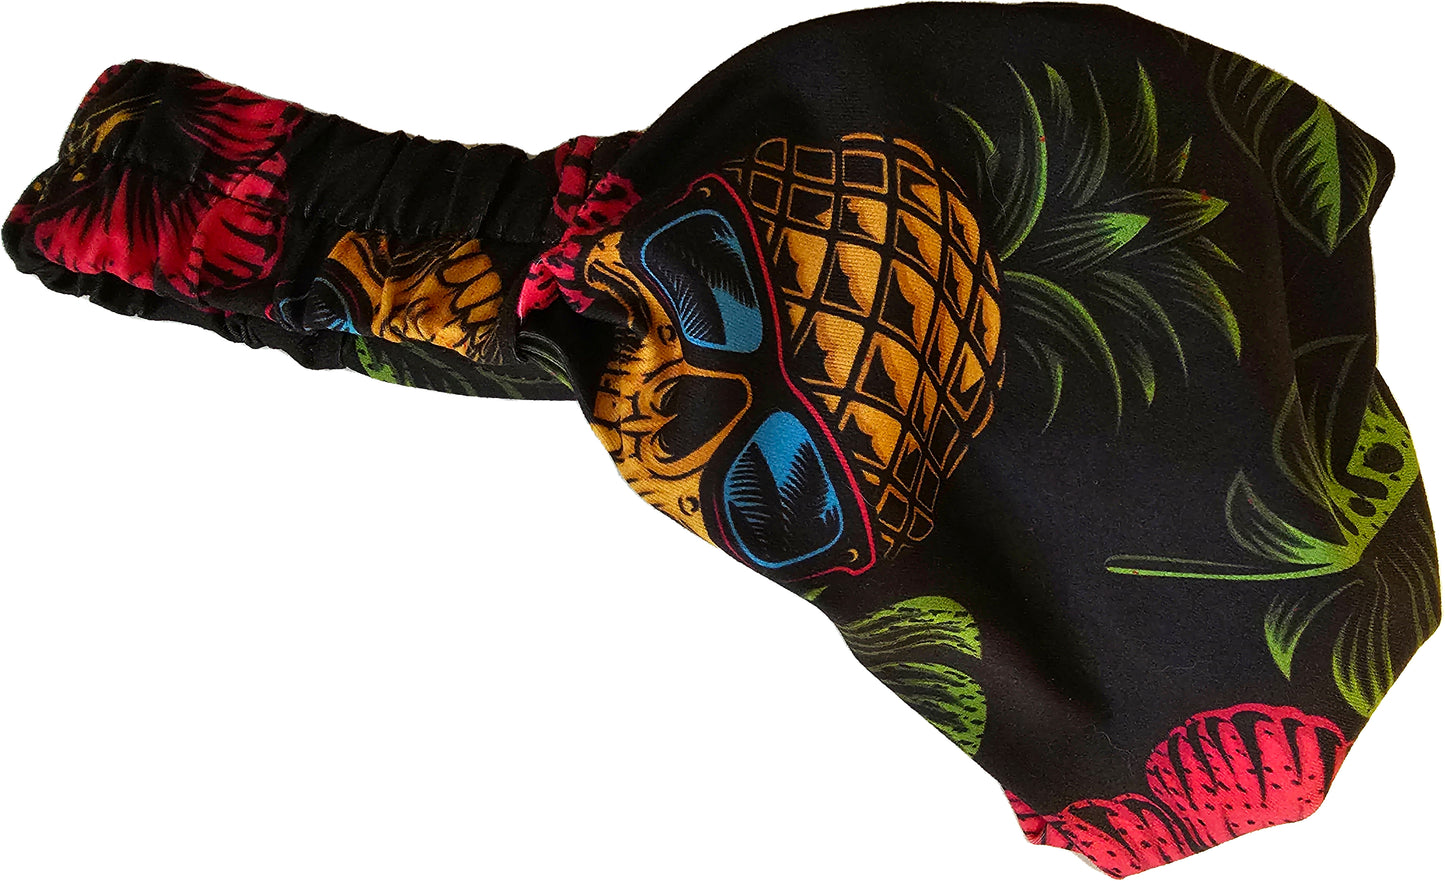 Pineapple Skull Headband -Matches Pineapple Skull YOGAZ